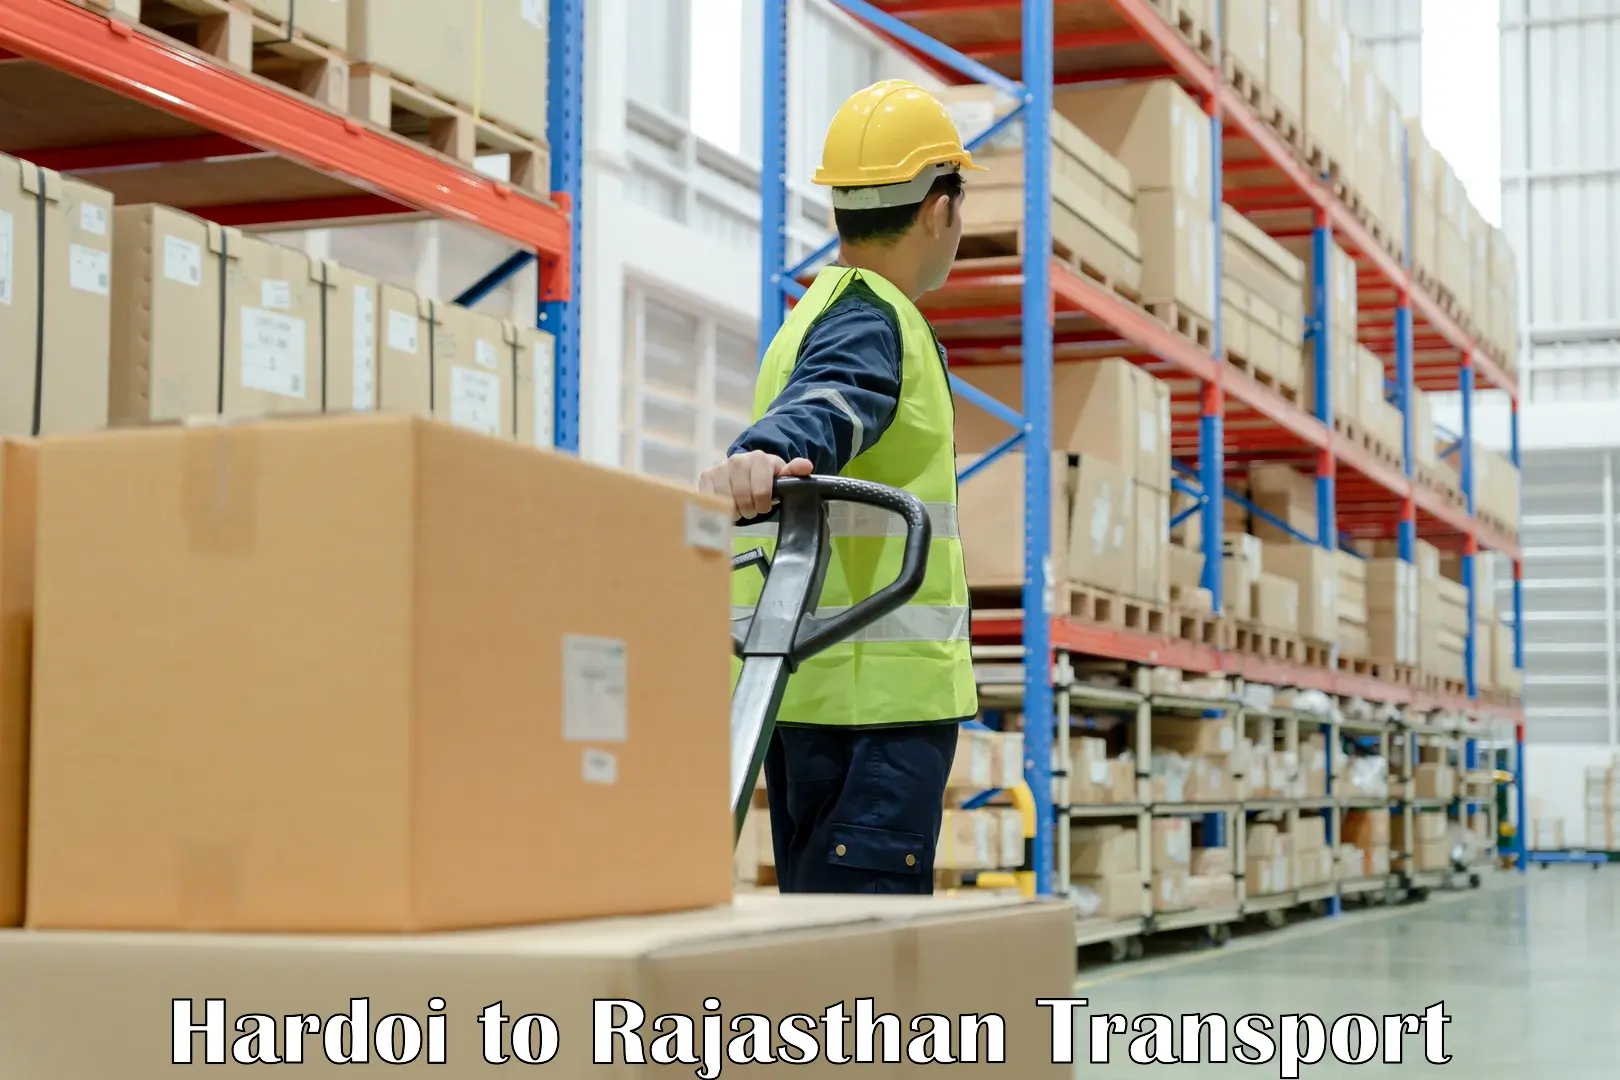 Truck transport companies in India Hardoi to Pratapgarh Rajasthan